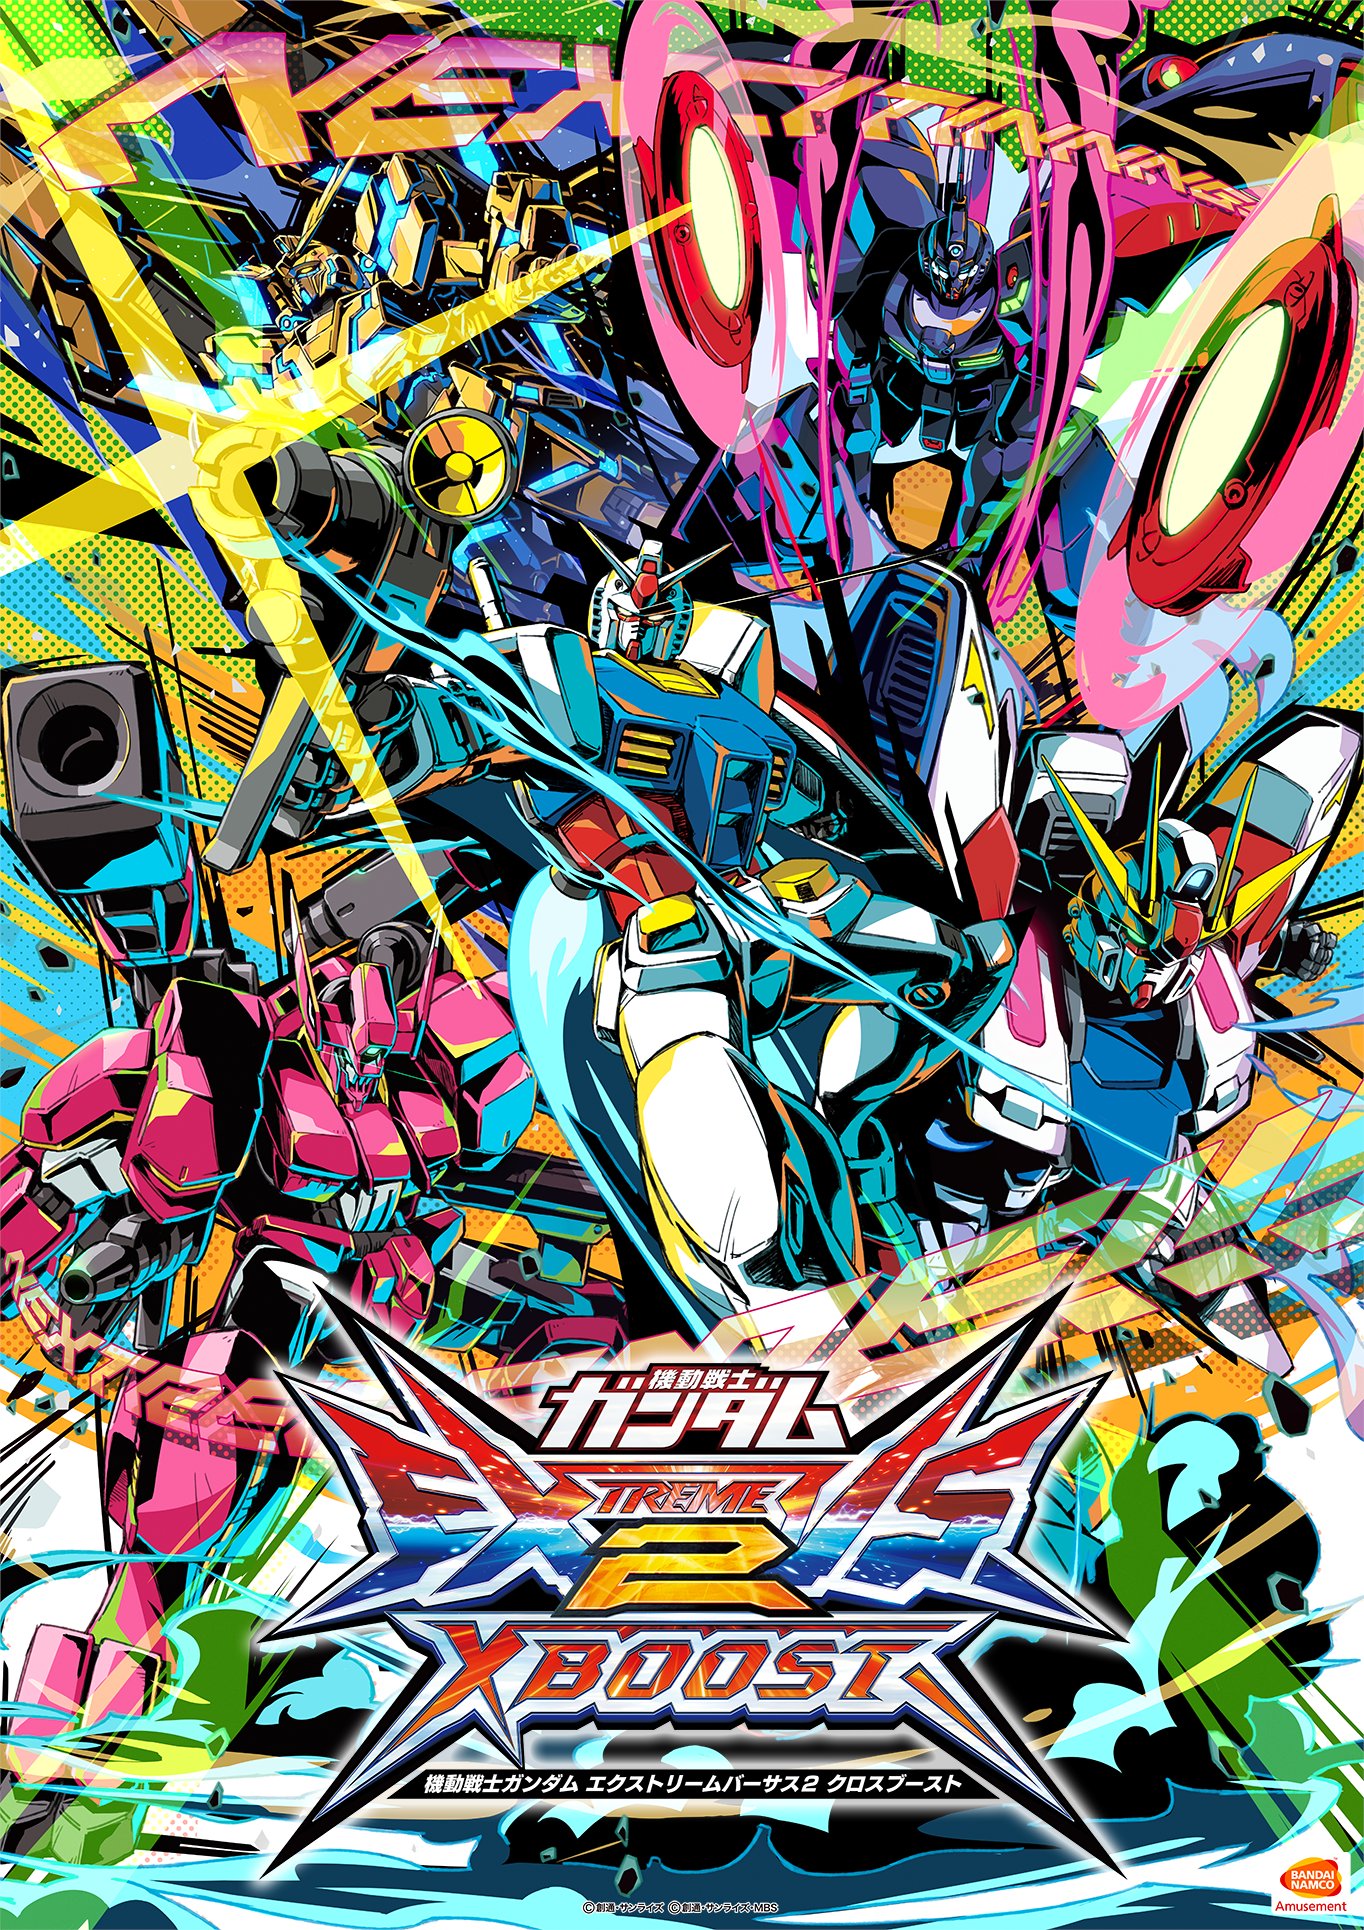 Mobile Suit Gundam Extreme Vs. 2 XBoost | The Gundam Wiki | Fandom